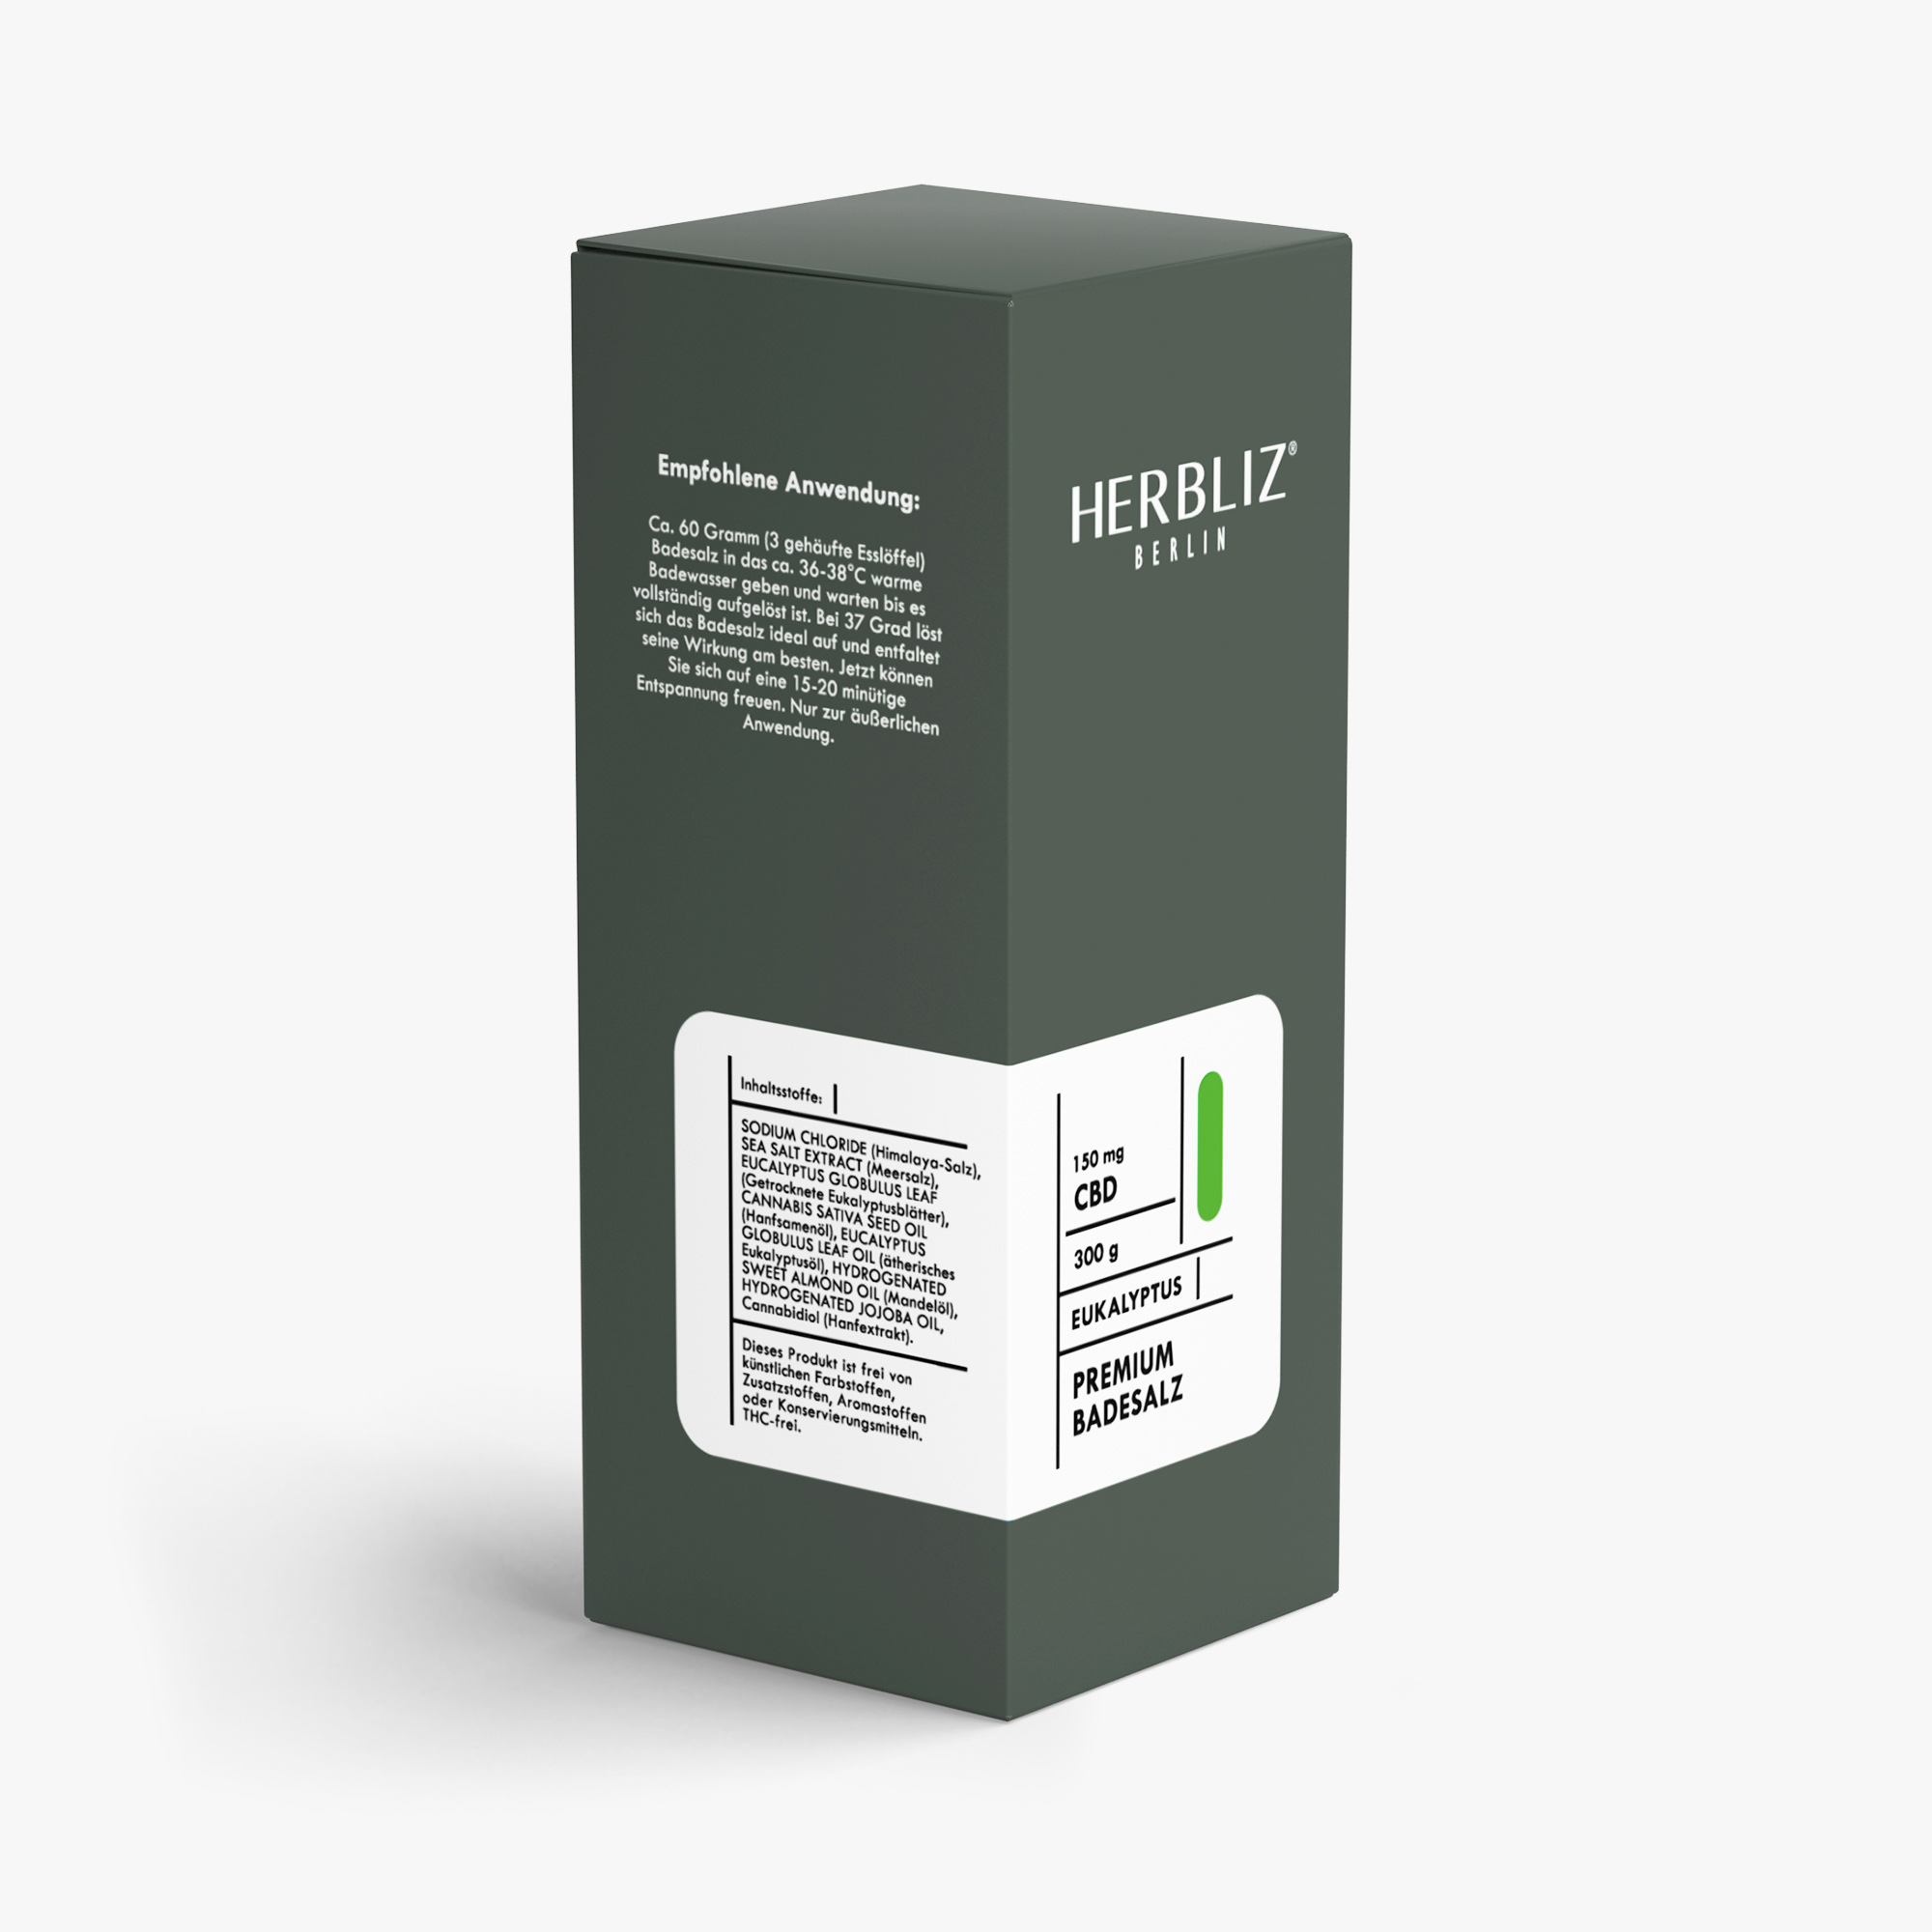 HERBLIZ CBD Badesalz - 4 Sorten - 150 mg - Eukalyptus